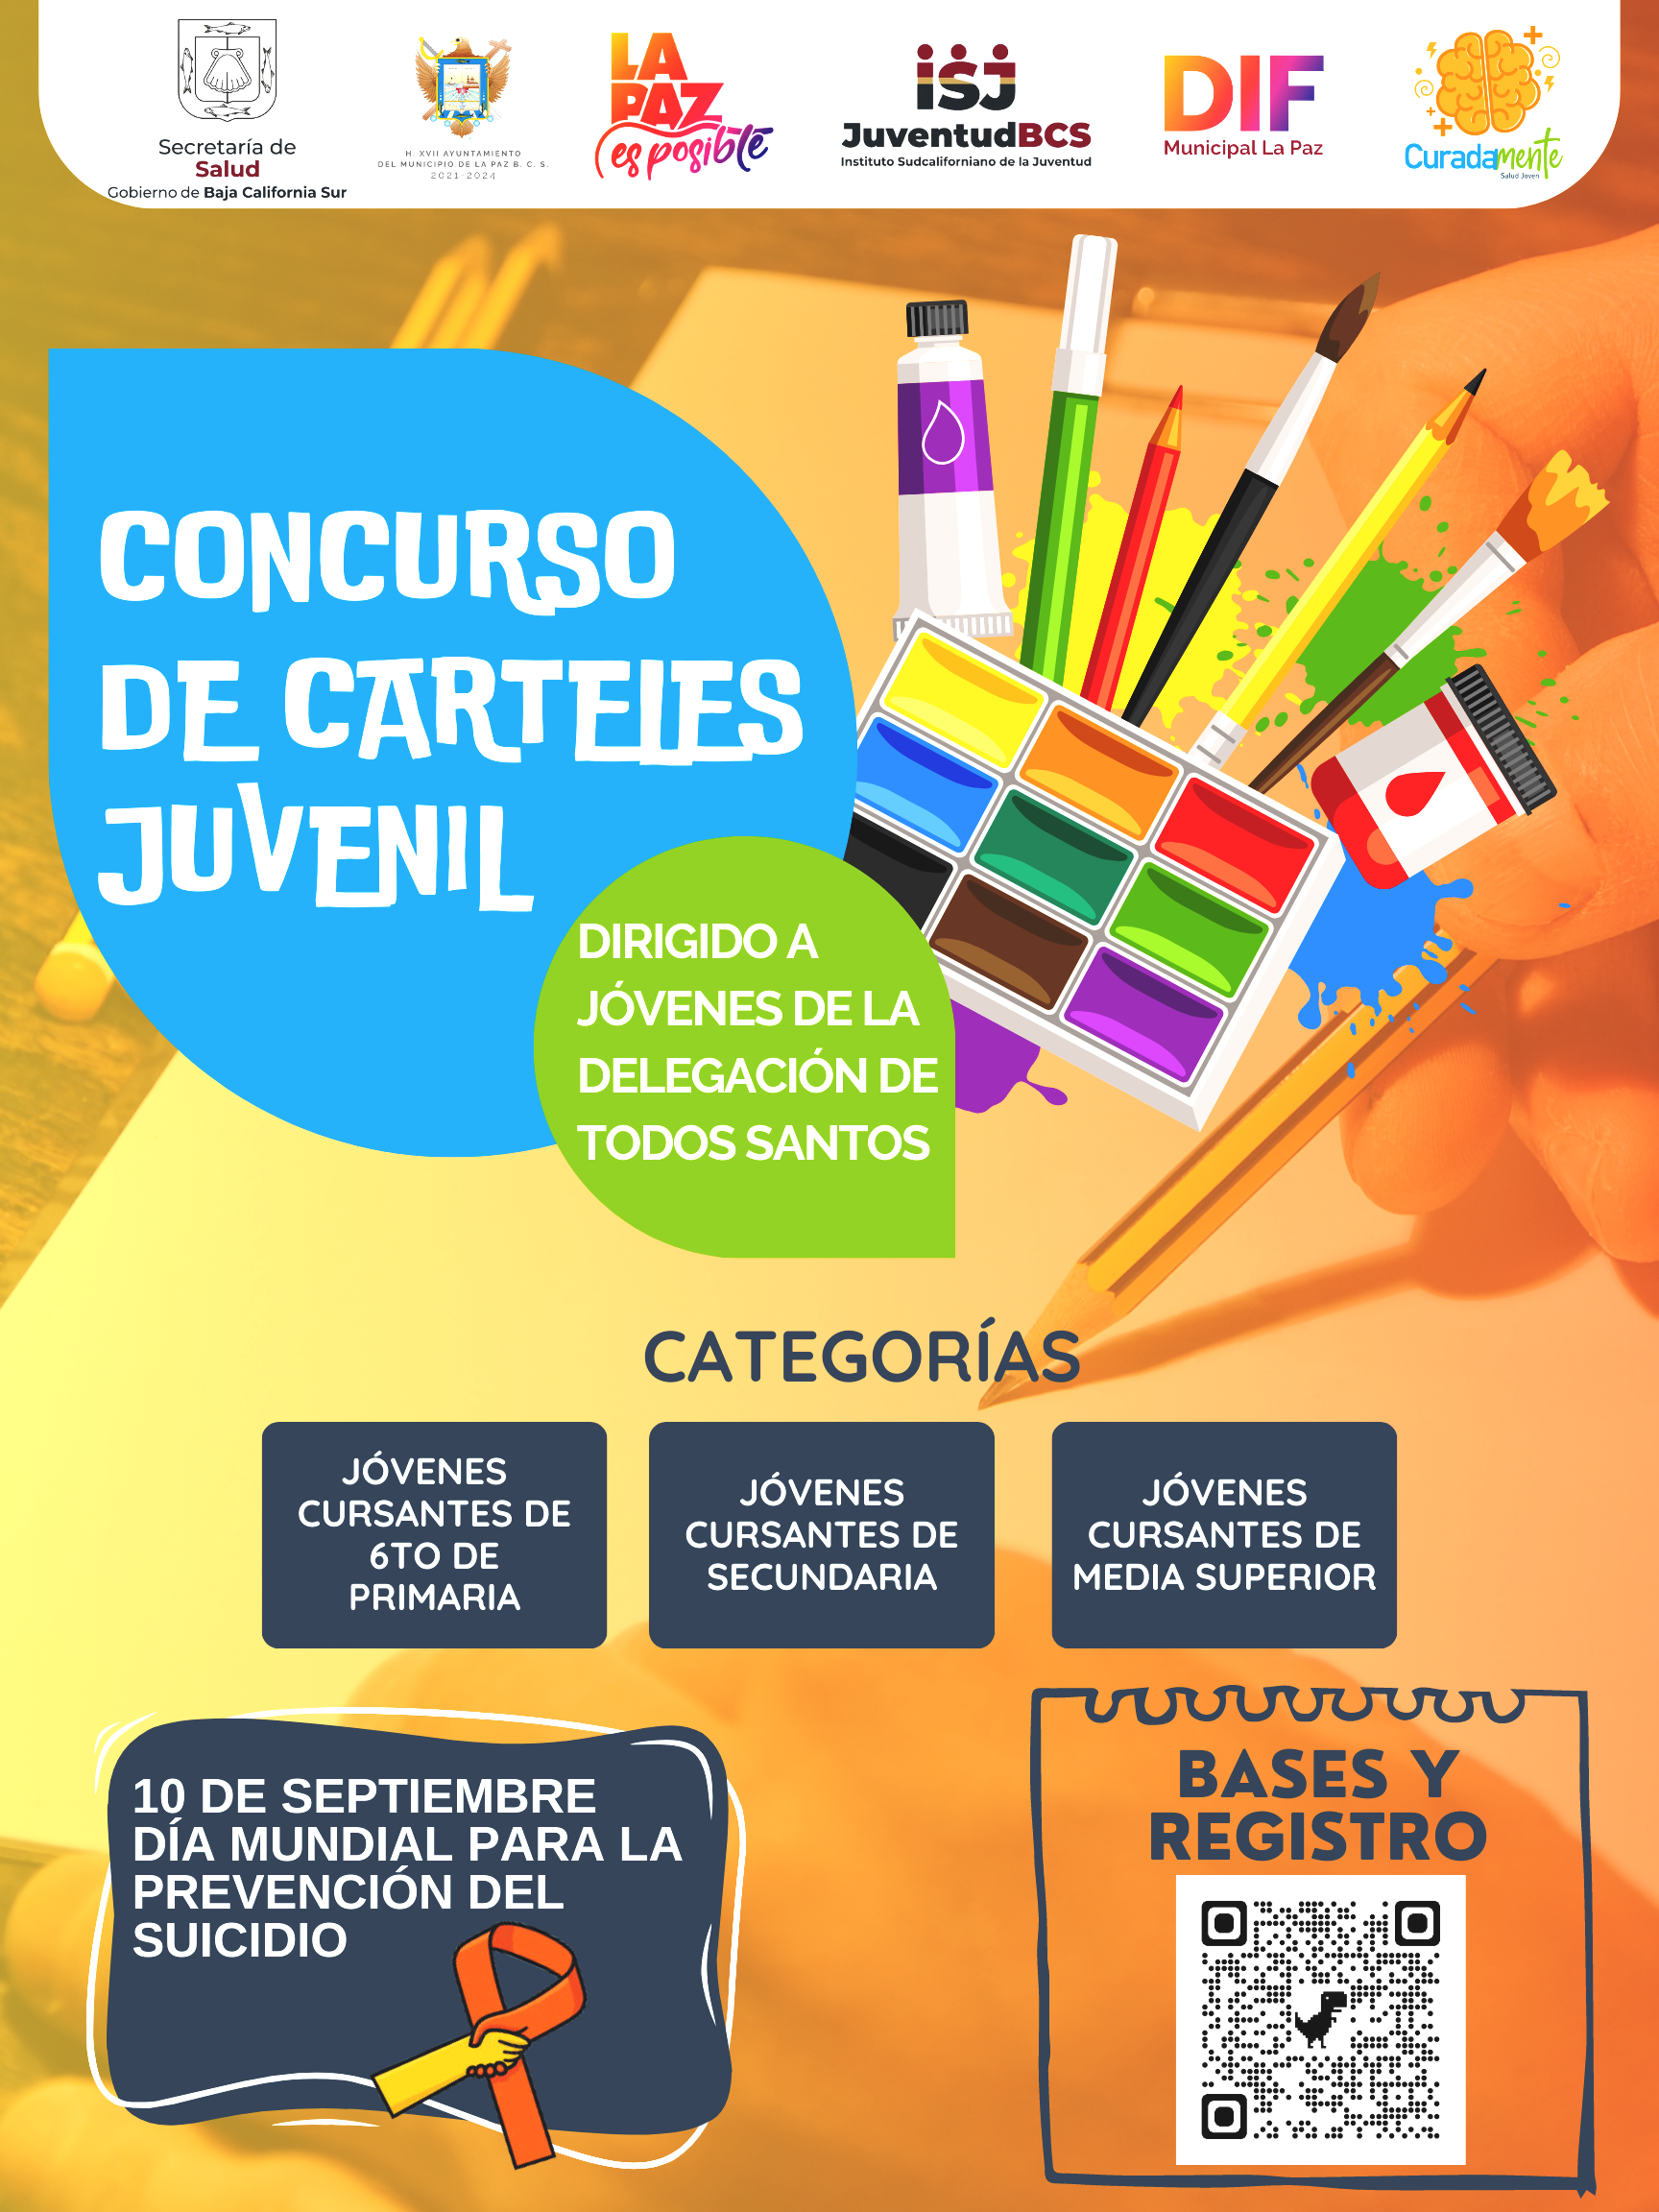 Convocan al “Concurso Juvenil de Carteles” en La Paz